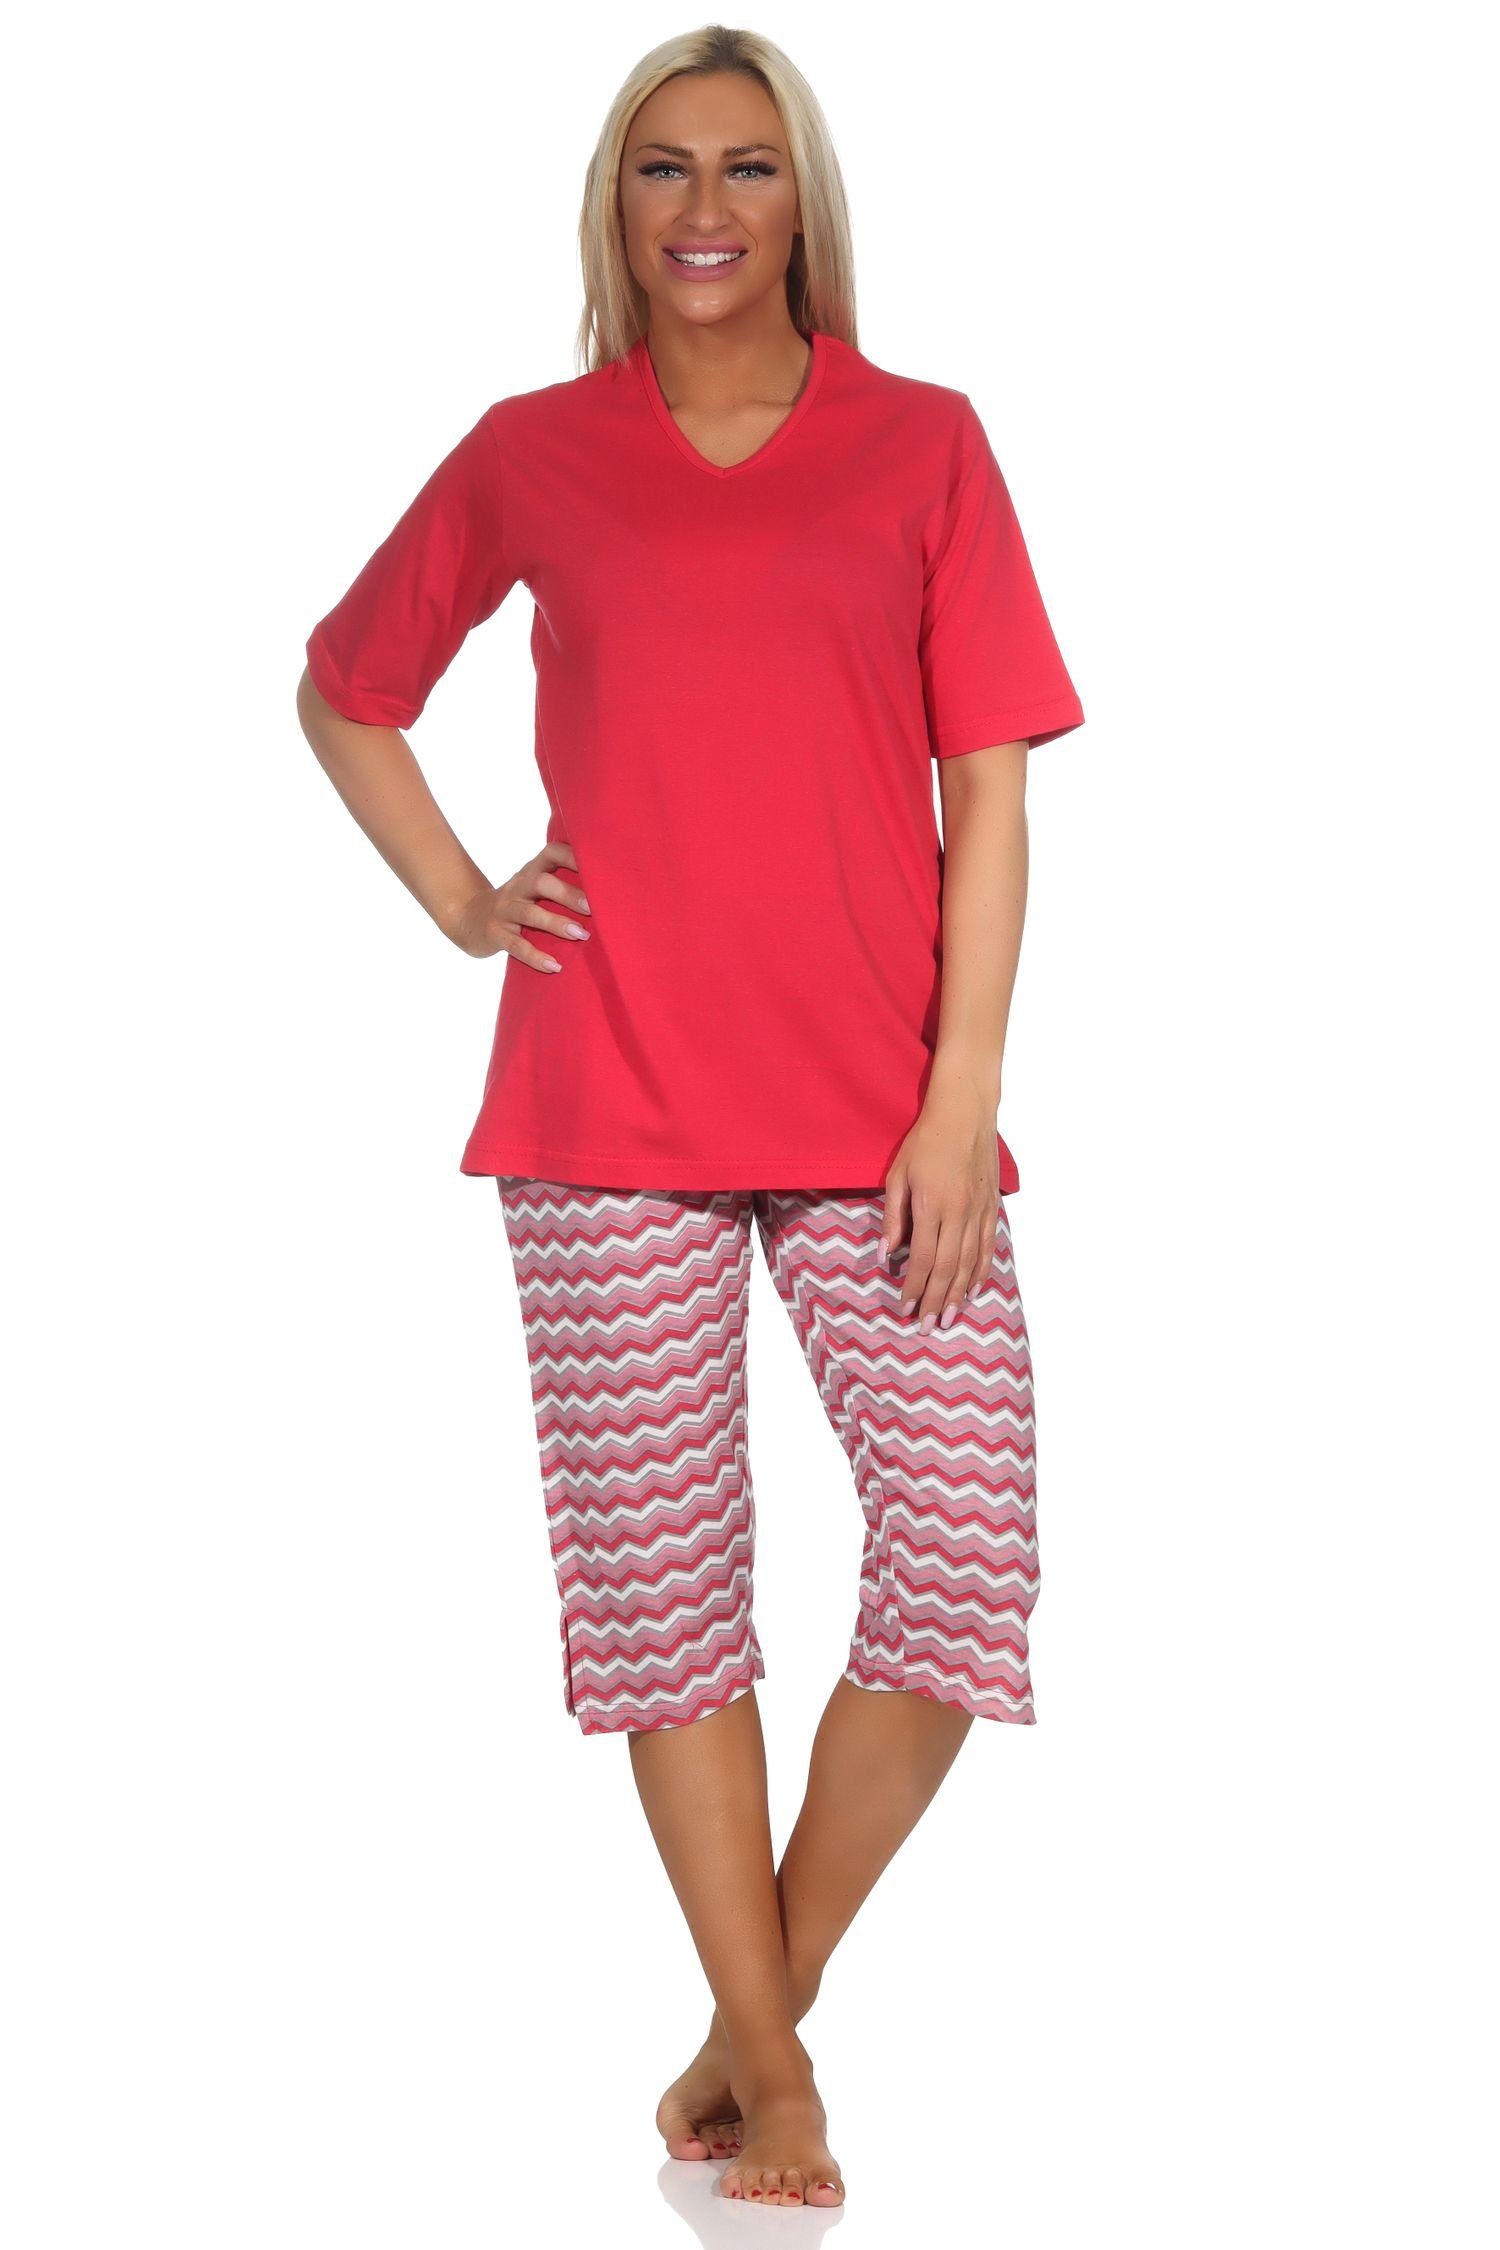 Capri Damen Pyjama Shorts, im rot Pyjama Ethno-Style 3/4 Capri Schlafanzug Normann mit